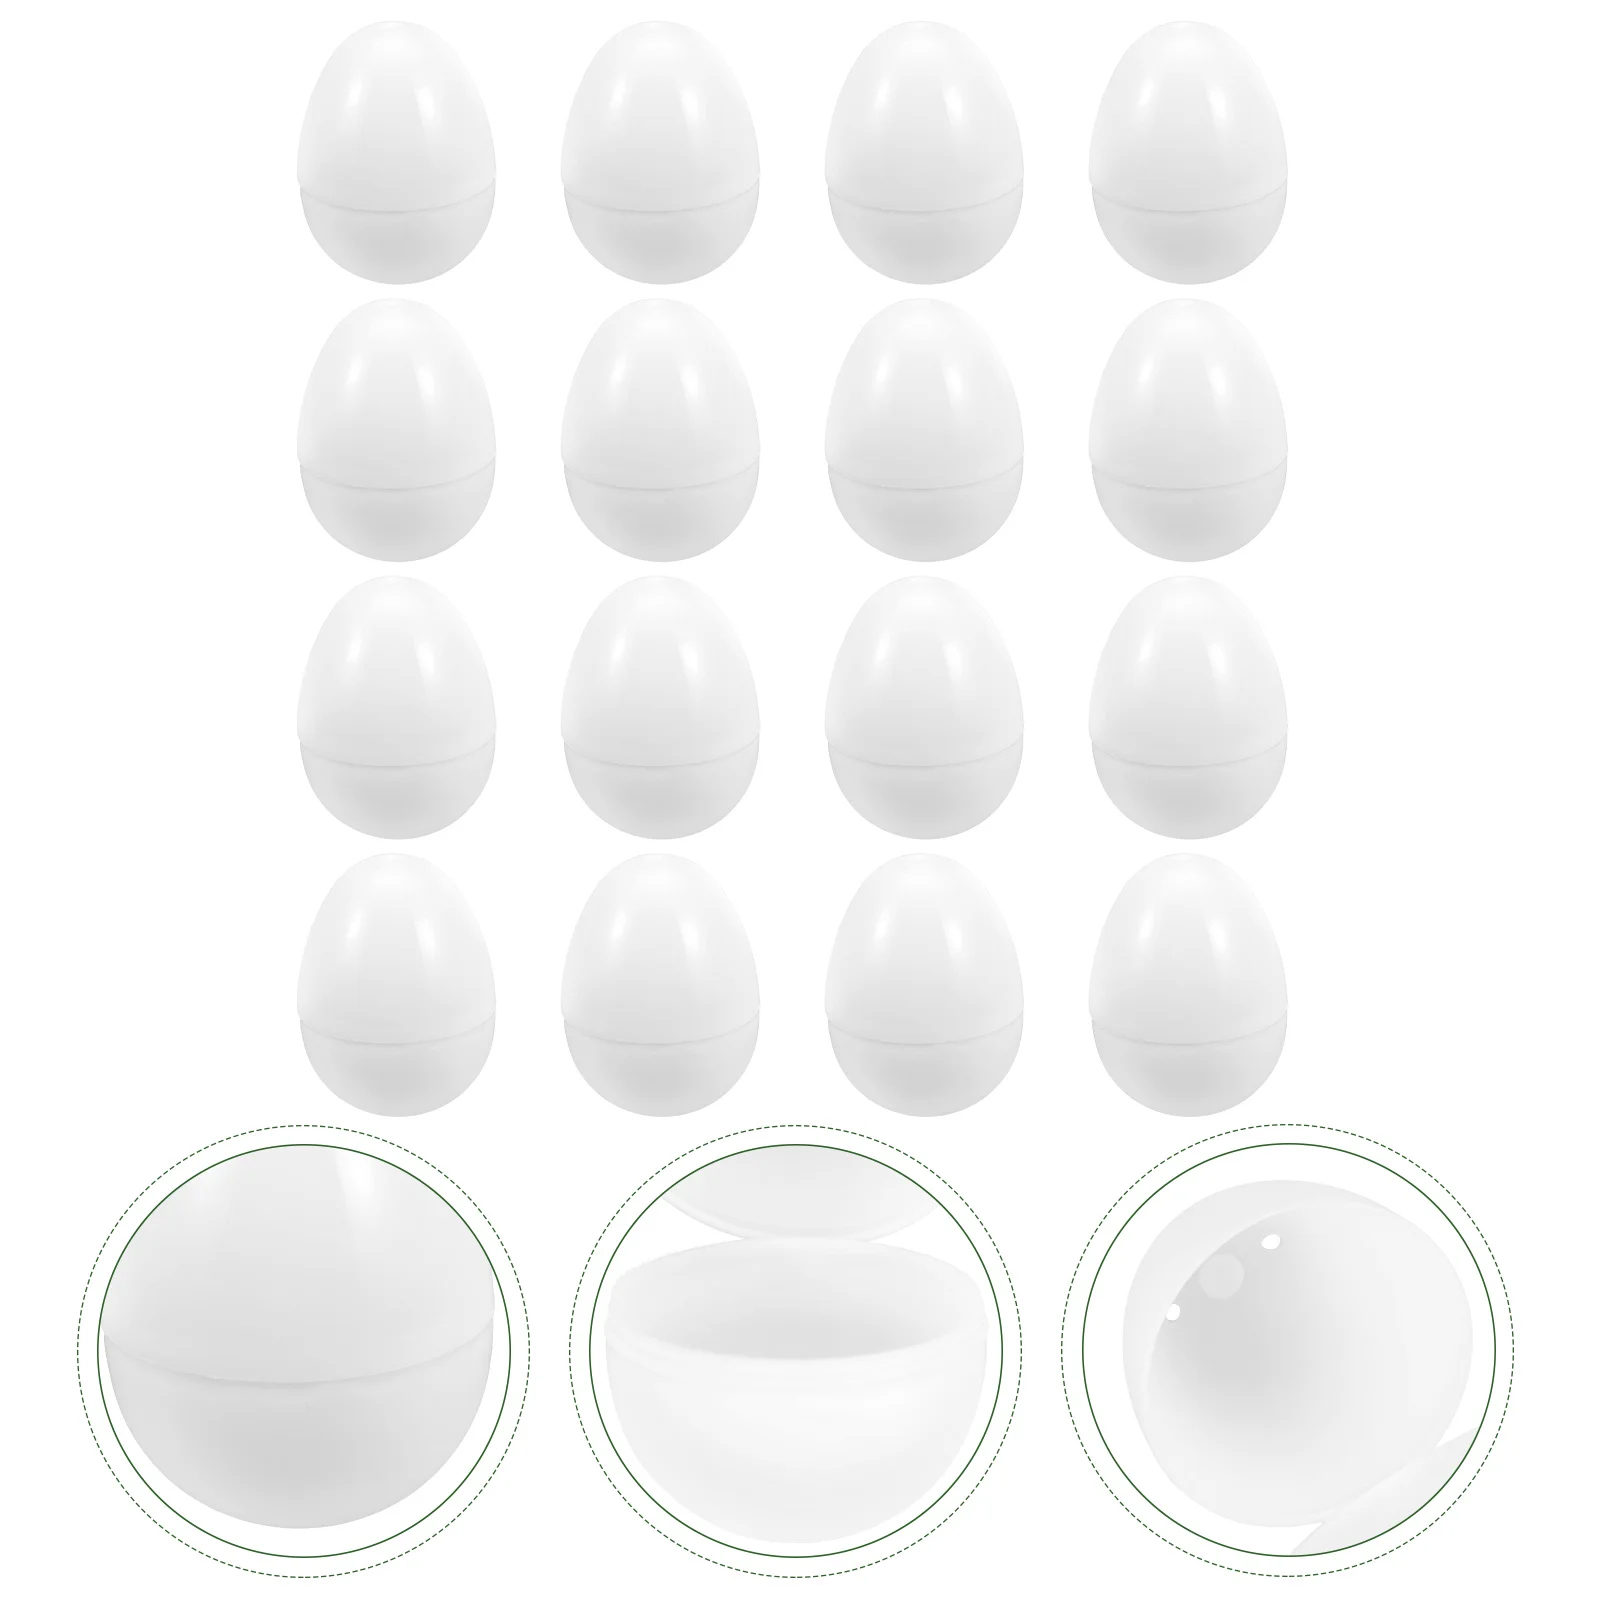 

16 Pcs DIY Easter Eggs Ornament Decor Artificiales Para Theme Party Favor Empty Shells